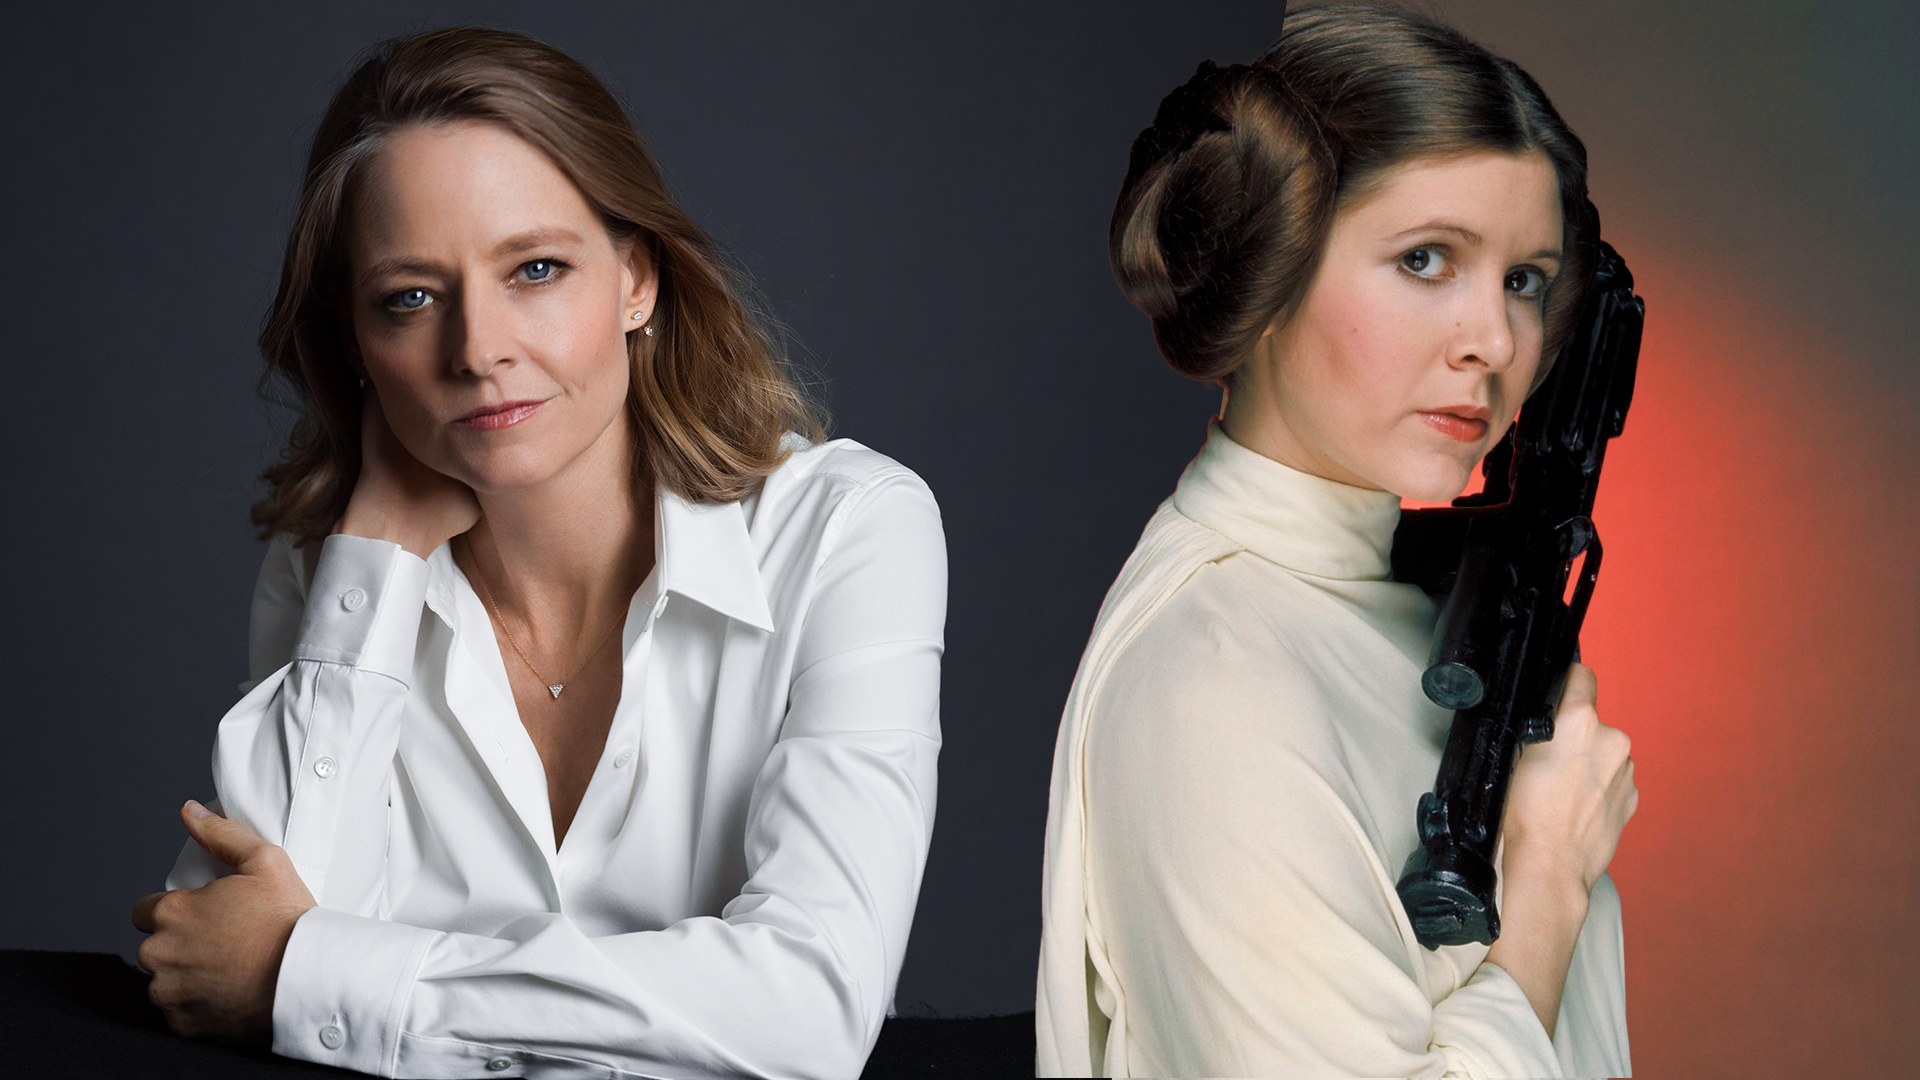 Jodie Foster: “Avrei potuto essere la Principessa Leia”